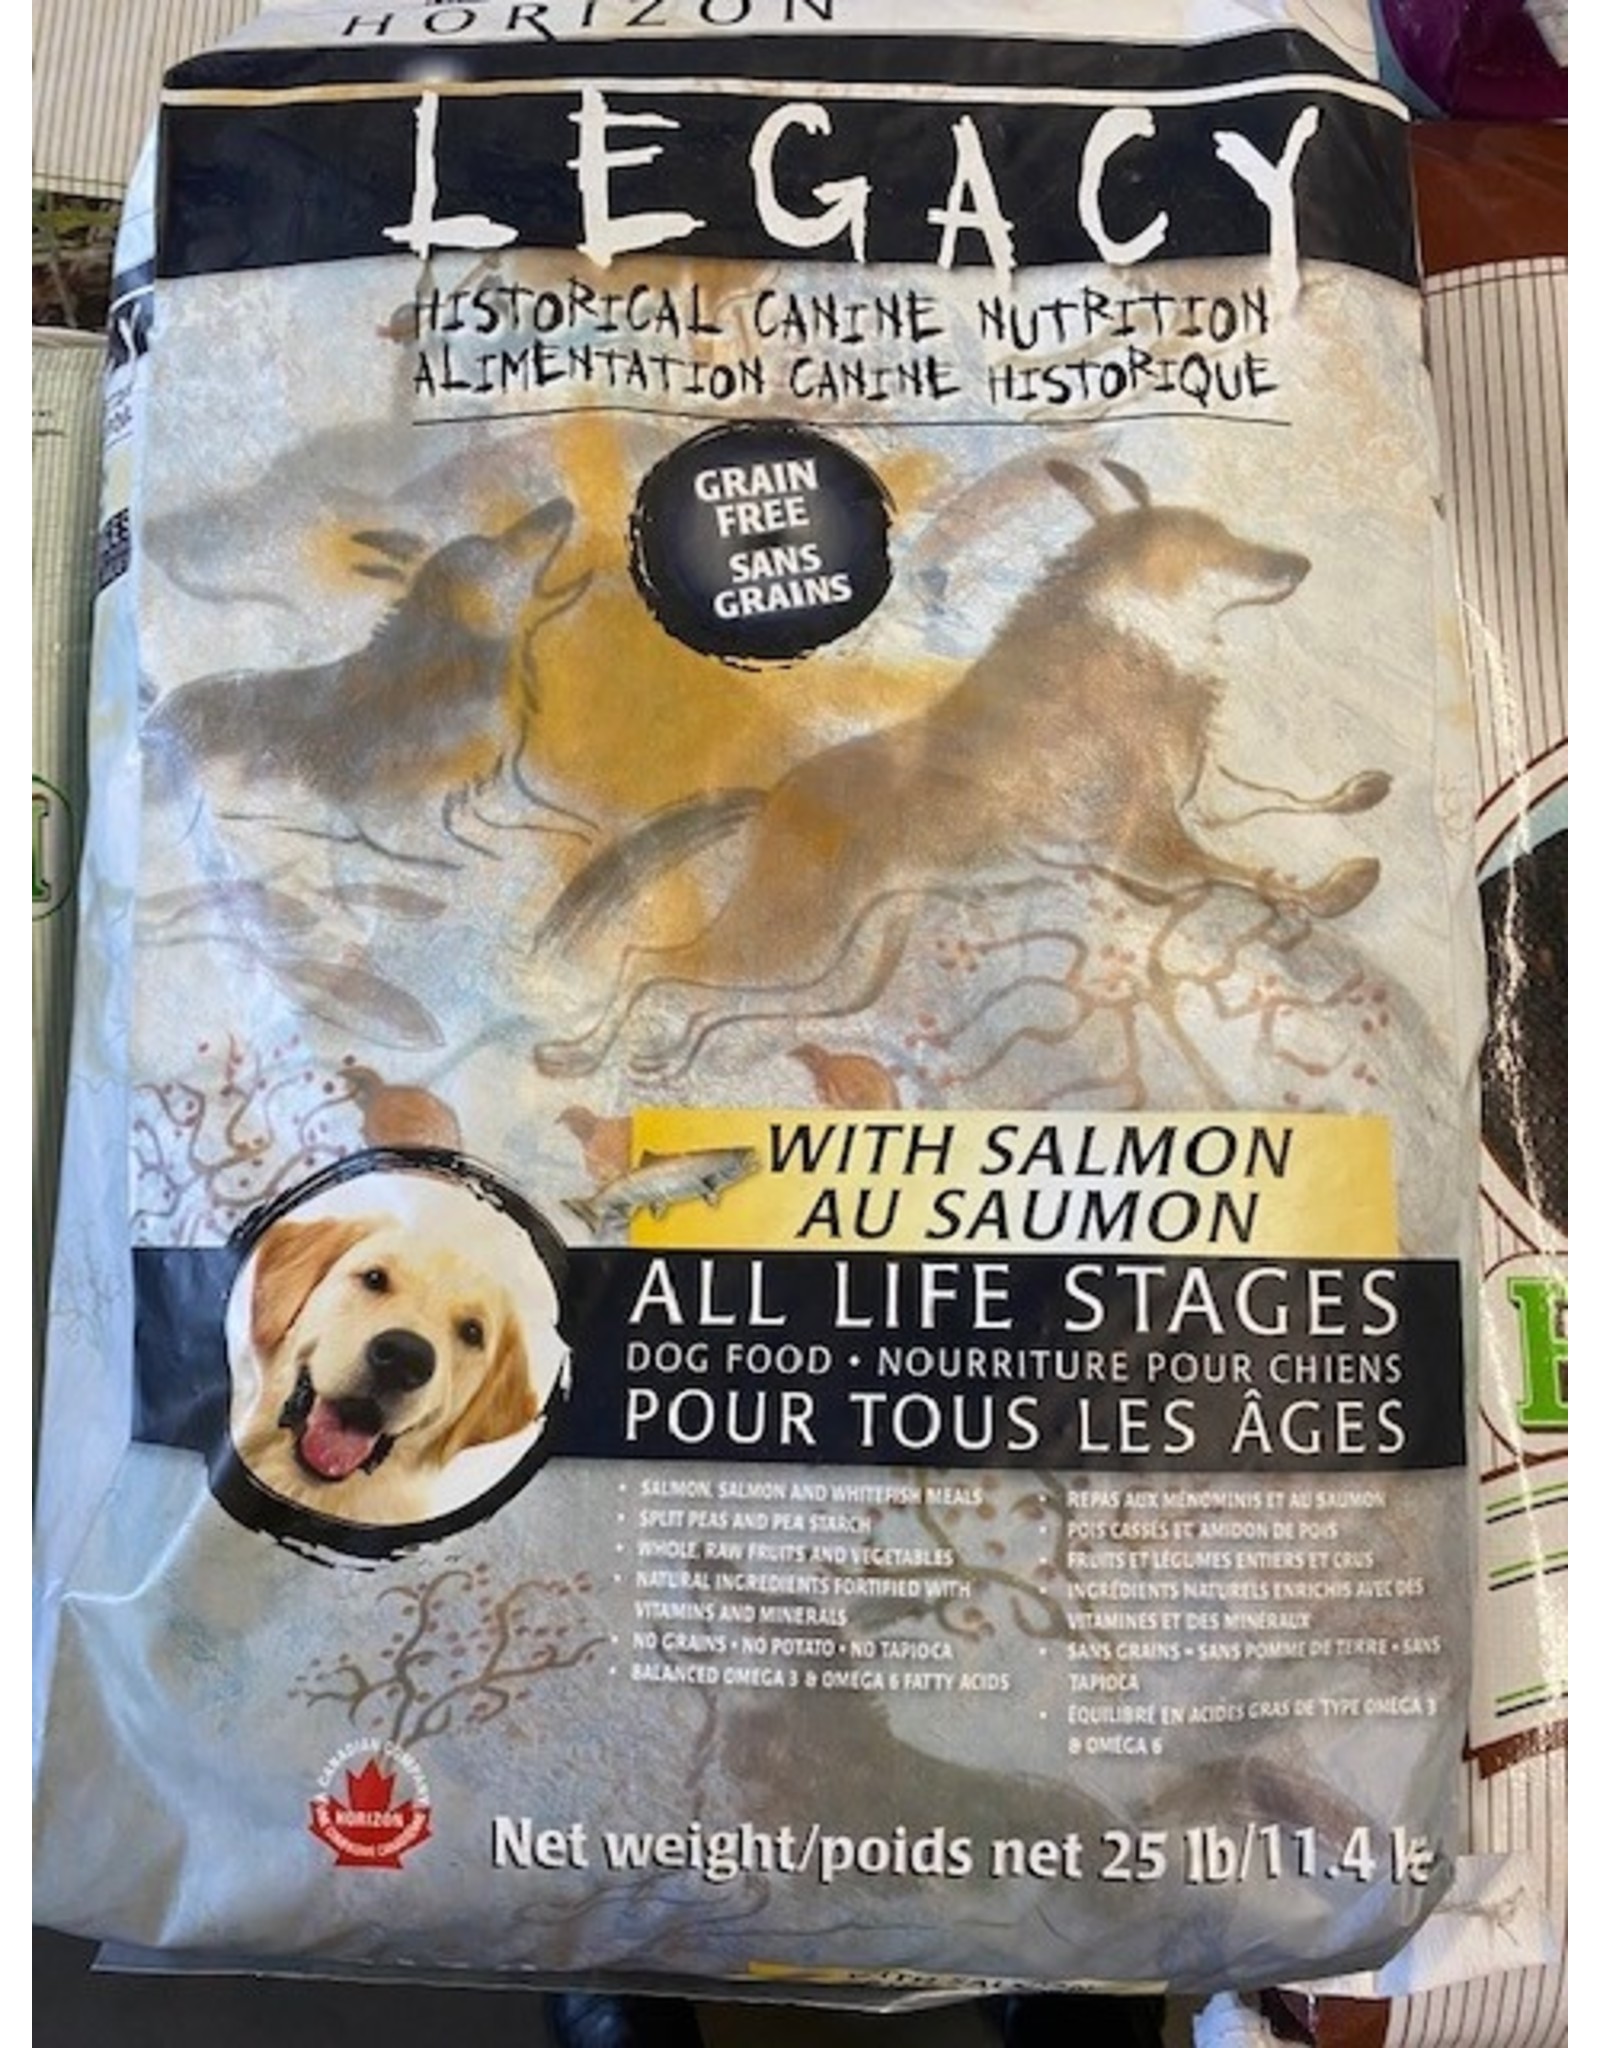 HORIZON LEGACY* Dog Food GRAIN FREE -30bpy Salmons, -  (Grey/Black Bag) All Life Stages 11.4kg /25lb  White Fish, Fruit, Veges    *9999P DNR    4900171 (C-CAN)